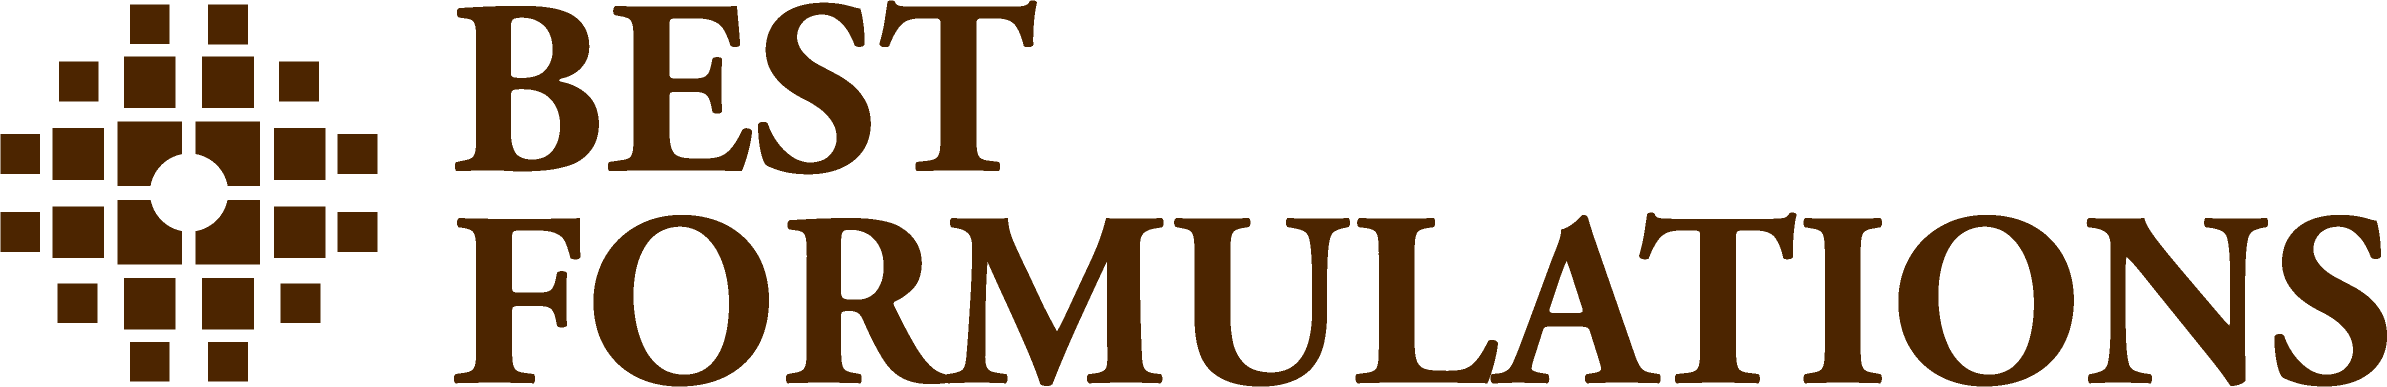 Logo Finance Business - Best Formulations (2387x387)